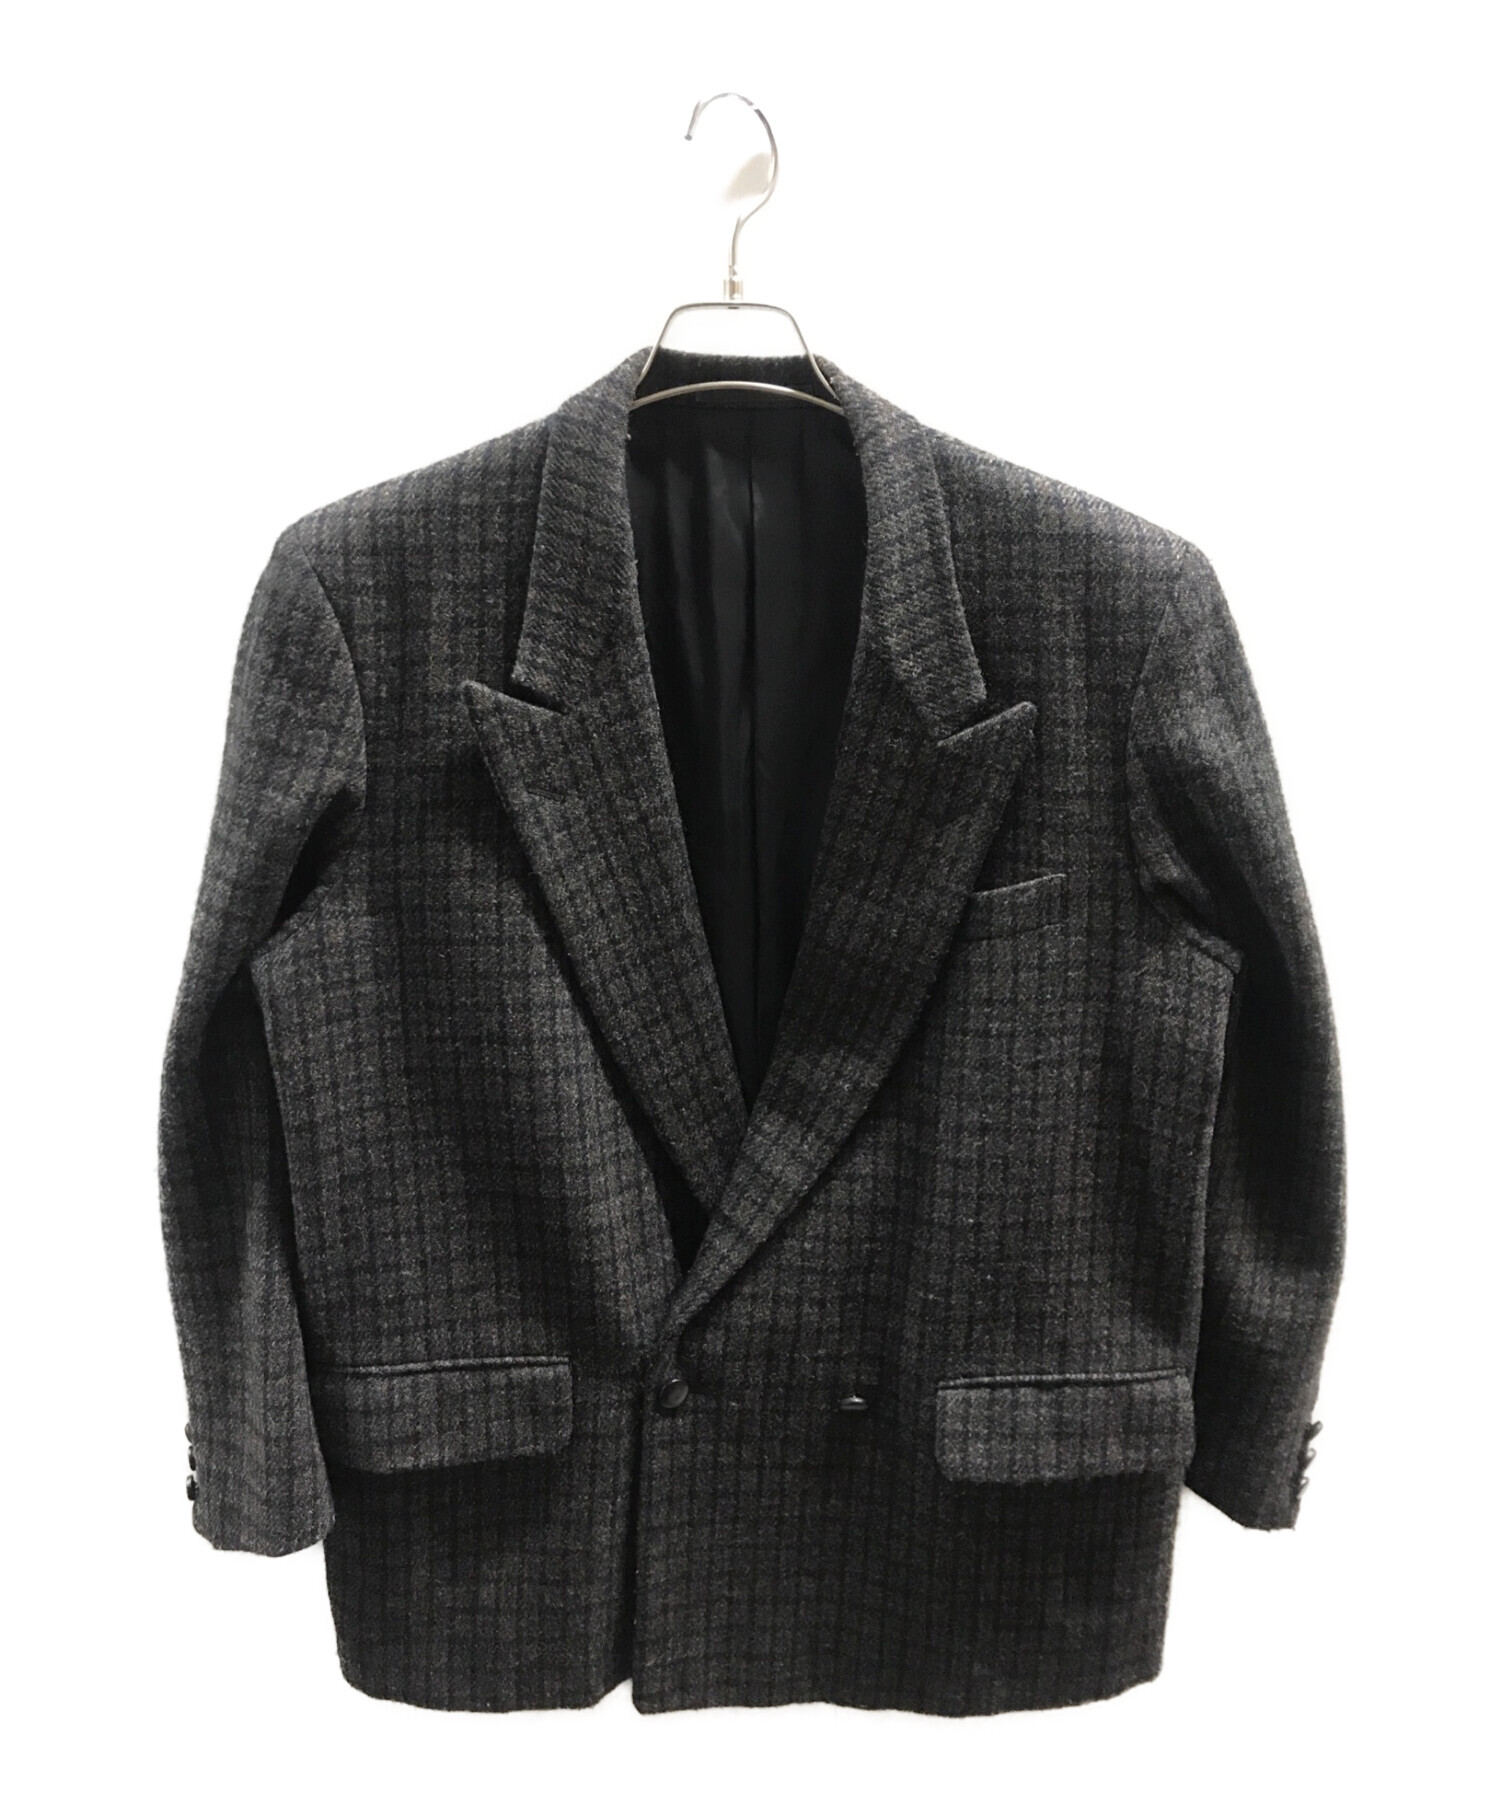 COMME des GARCONS HOMME (コムデギャルソン オム) Check Double Tweed Jacket ネイビー サイズ:S